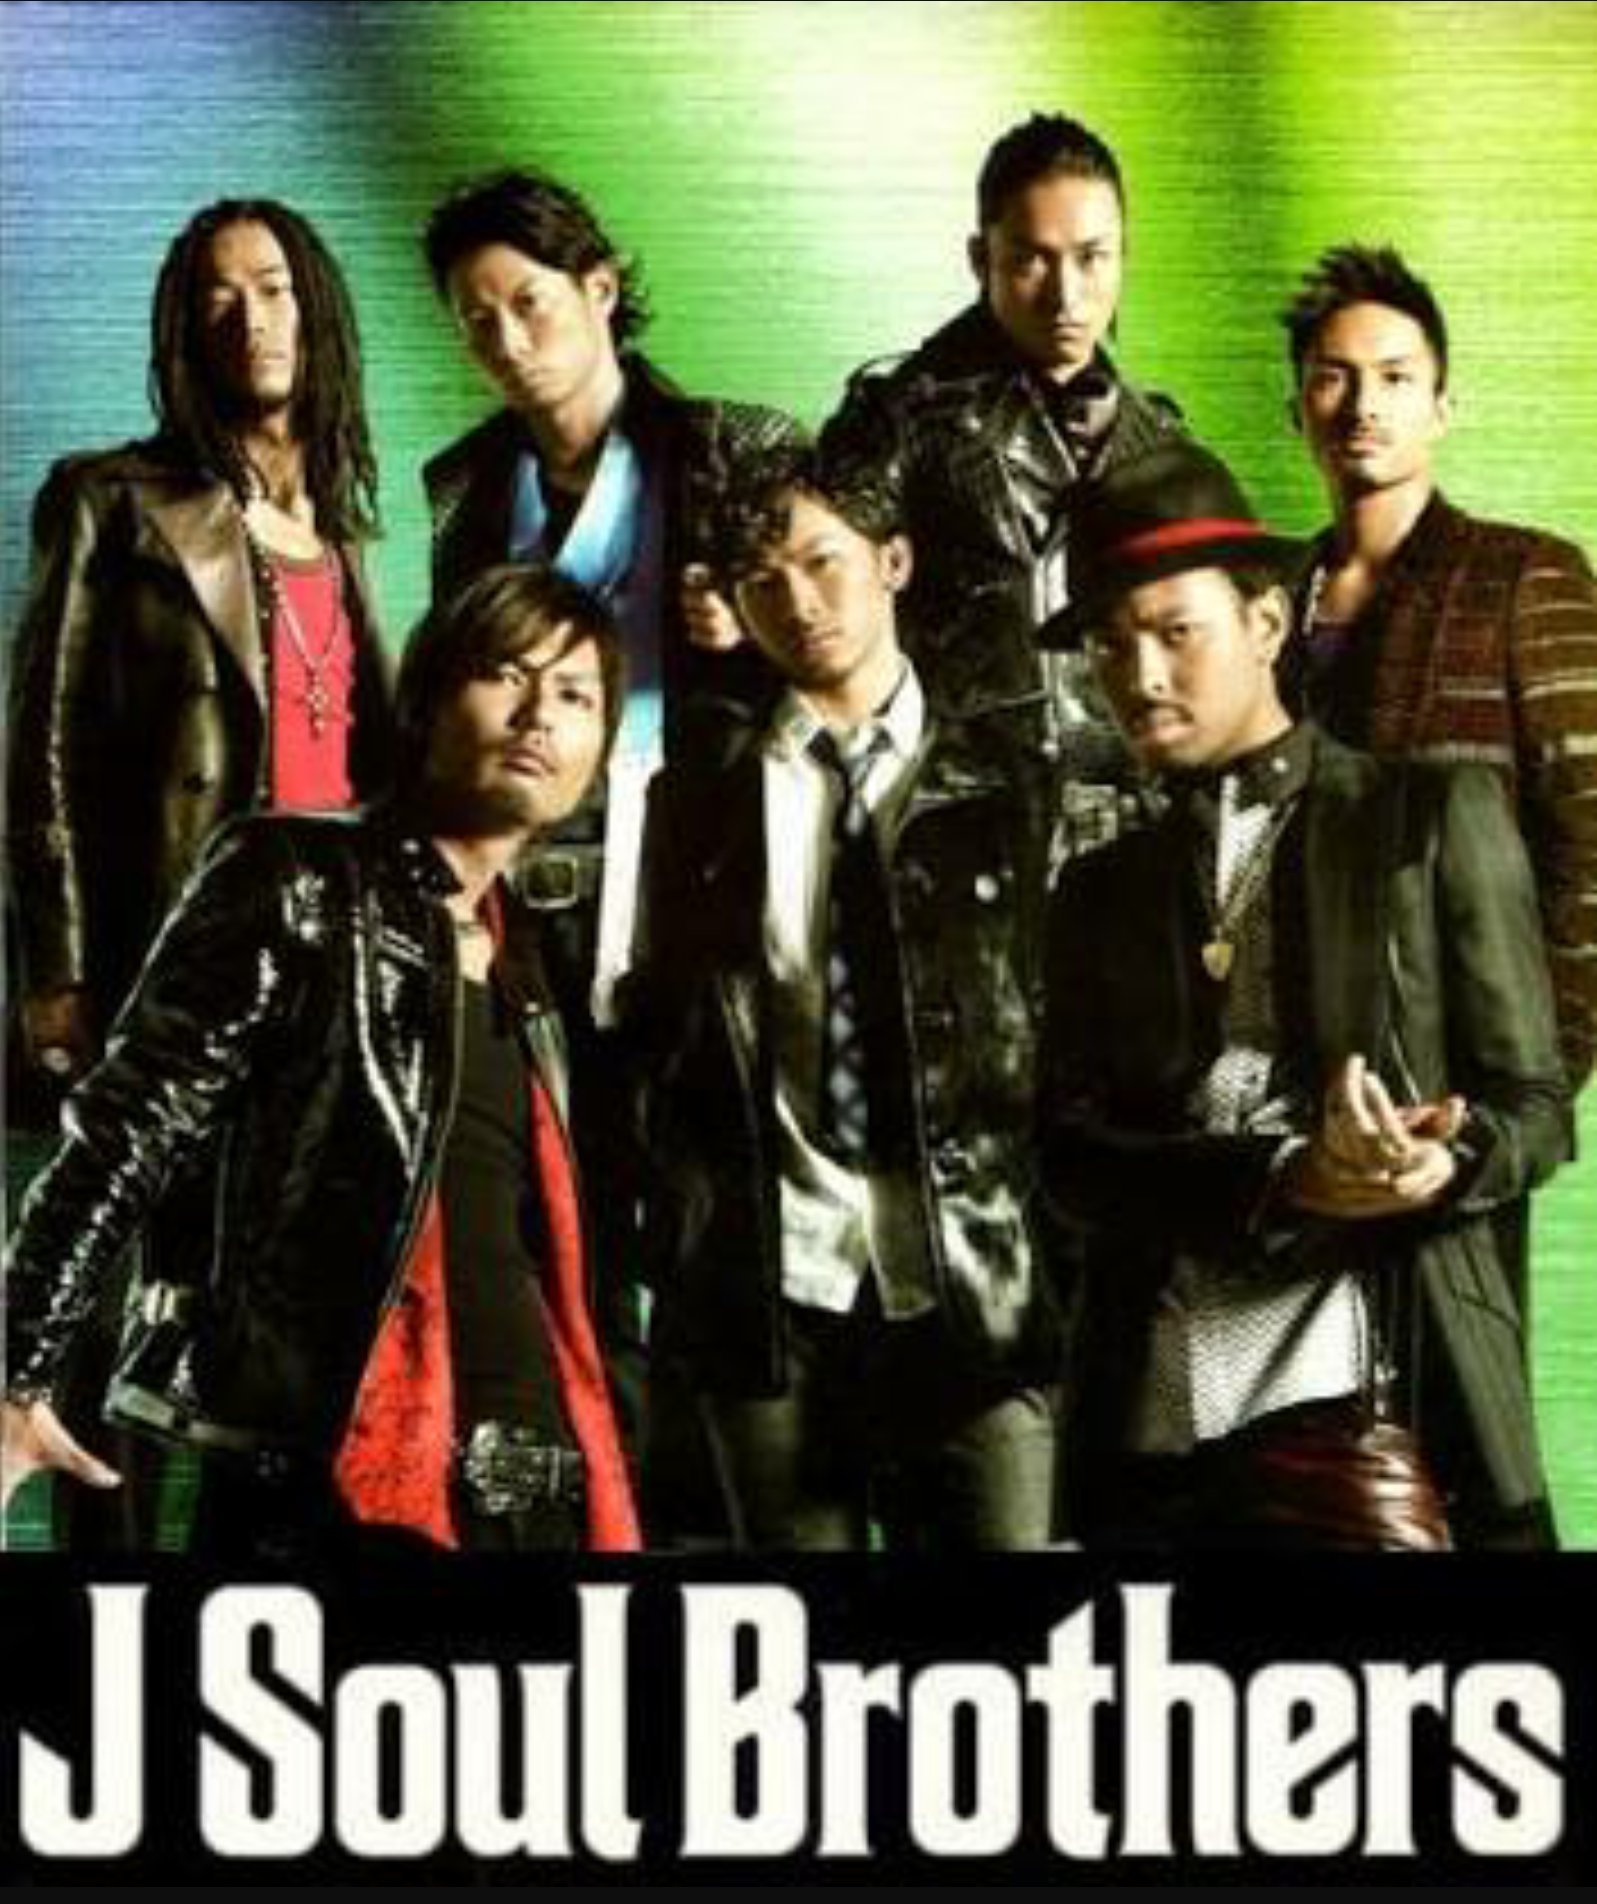 SALE 二代目J soul brothers ecousarecycling.com